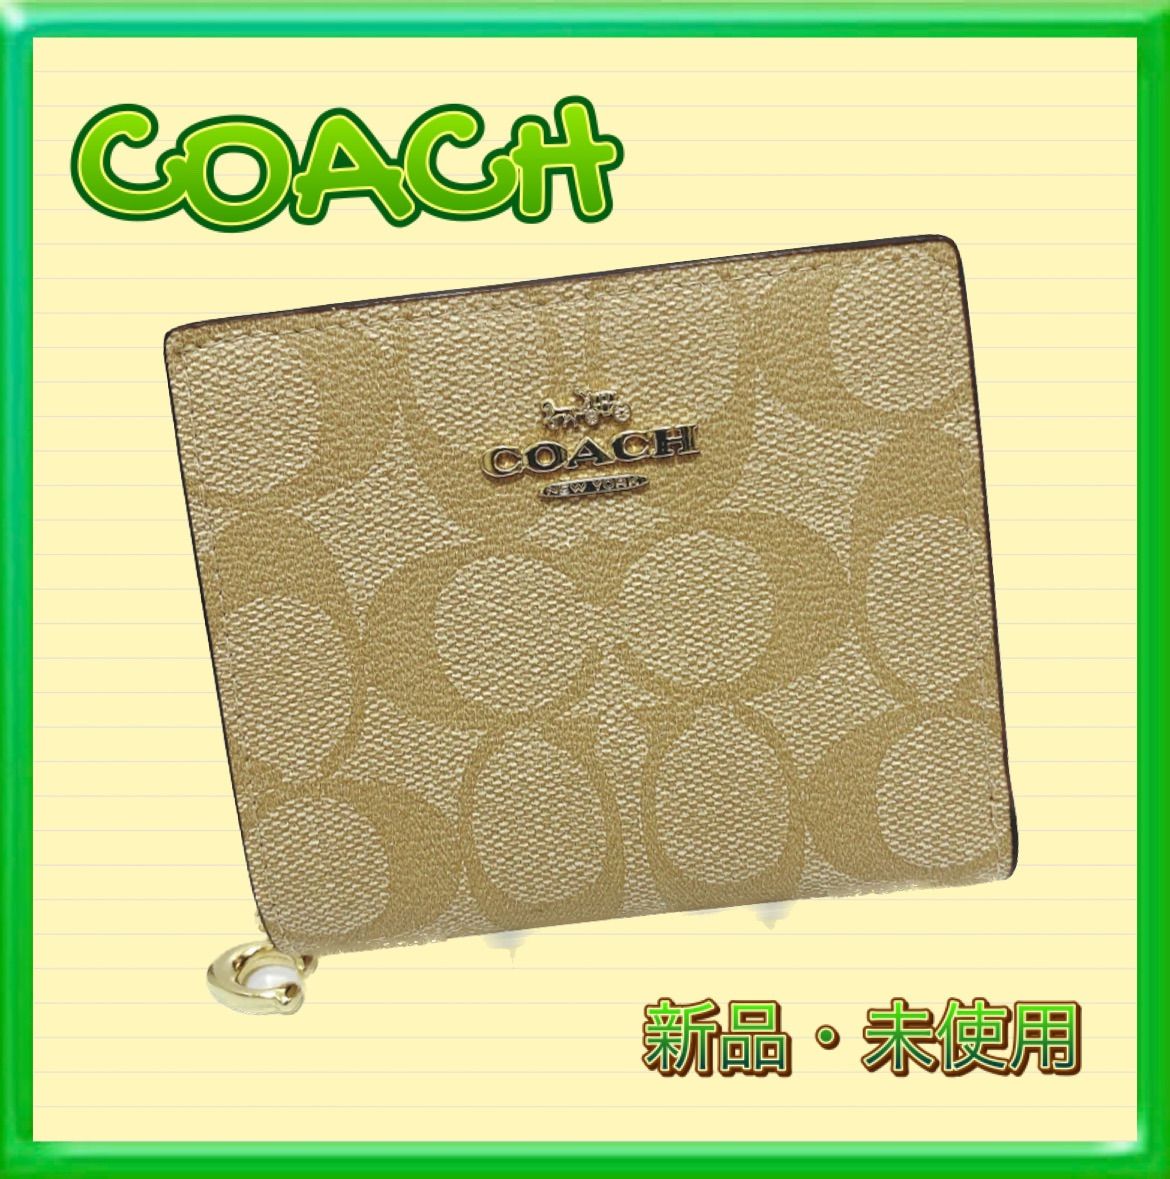 COACH 二つ折り財布 コンパクト ライトカーキ ピンク - Piccolo